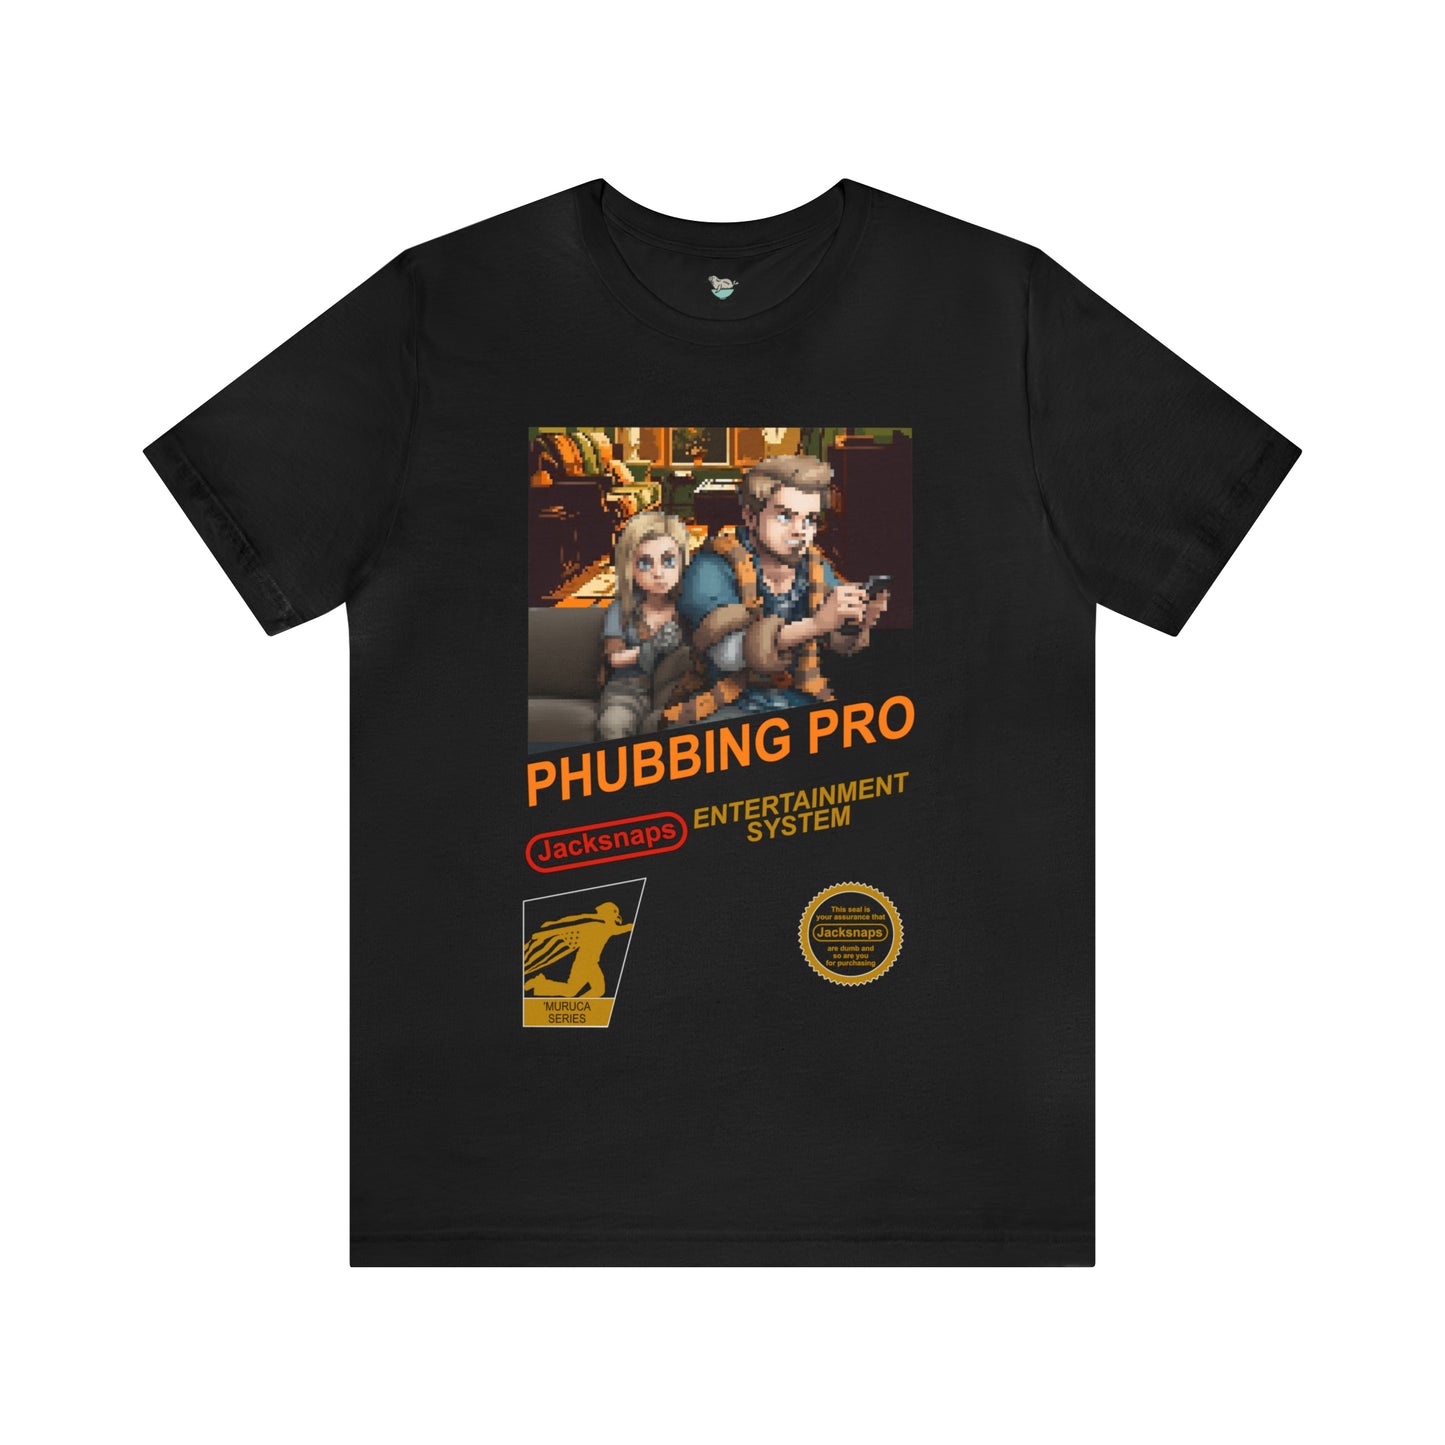 Phubbing Pro, Classic retro game